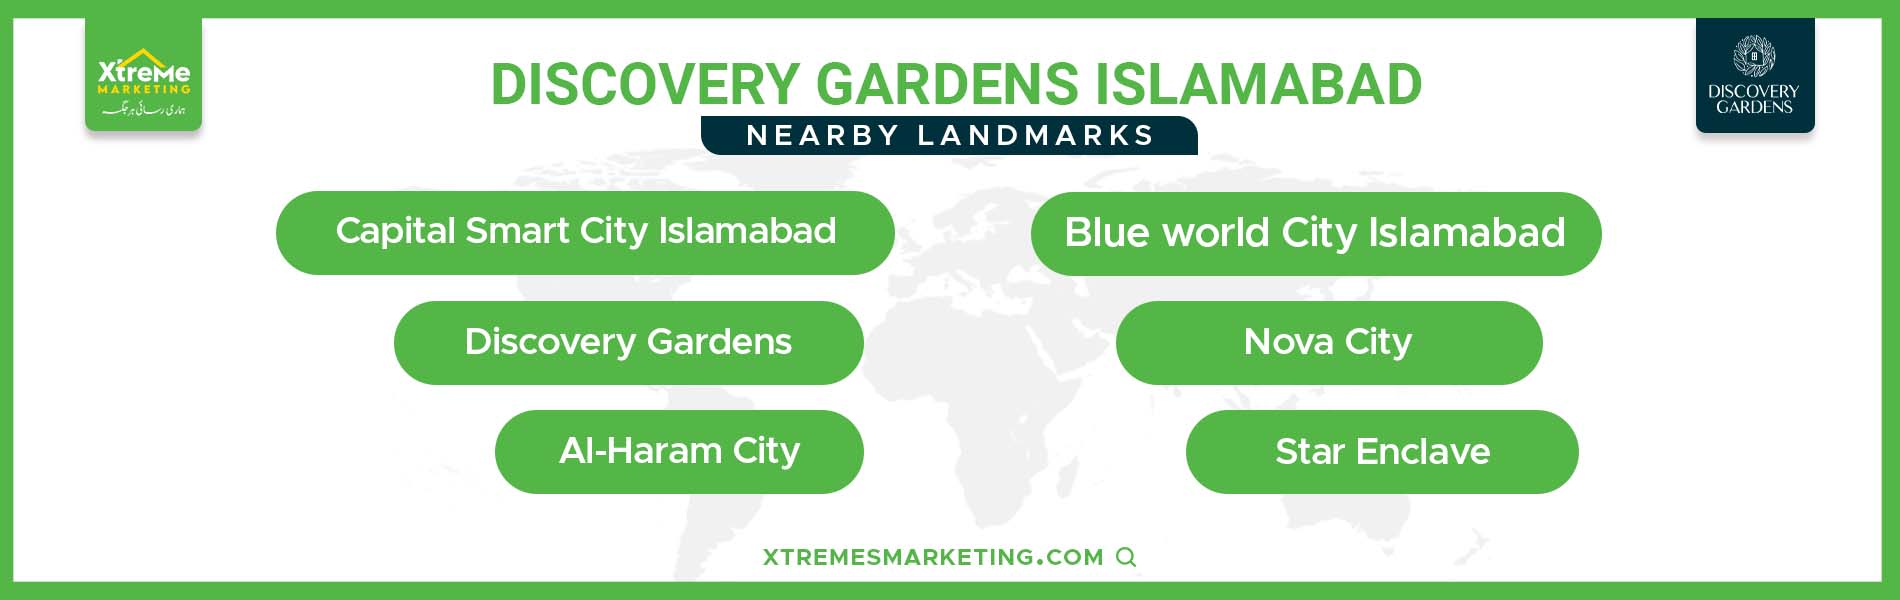 Discovery Gardens Islamabad Nearby Landmarks